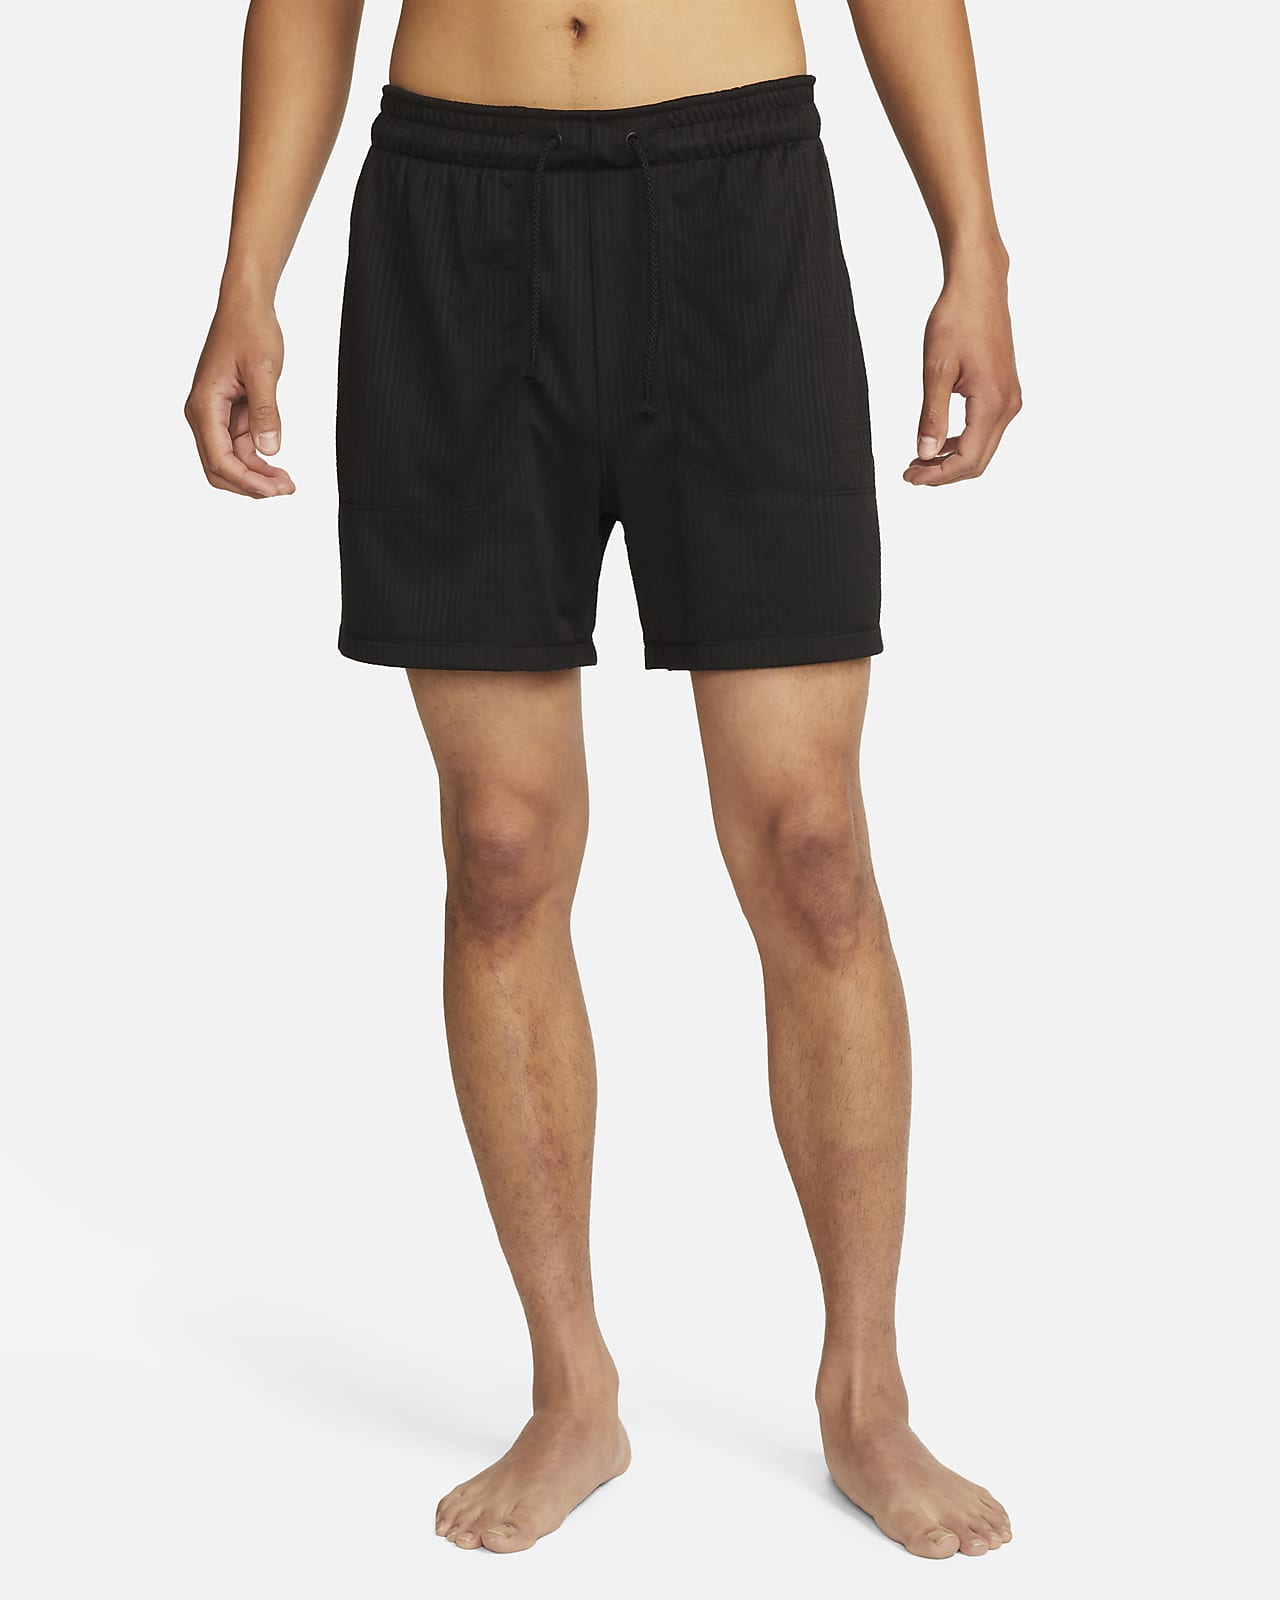 Nike Yoga Pantalons curts Dri-FIT sense folre de 13 cm - Home